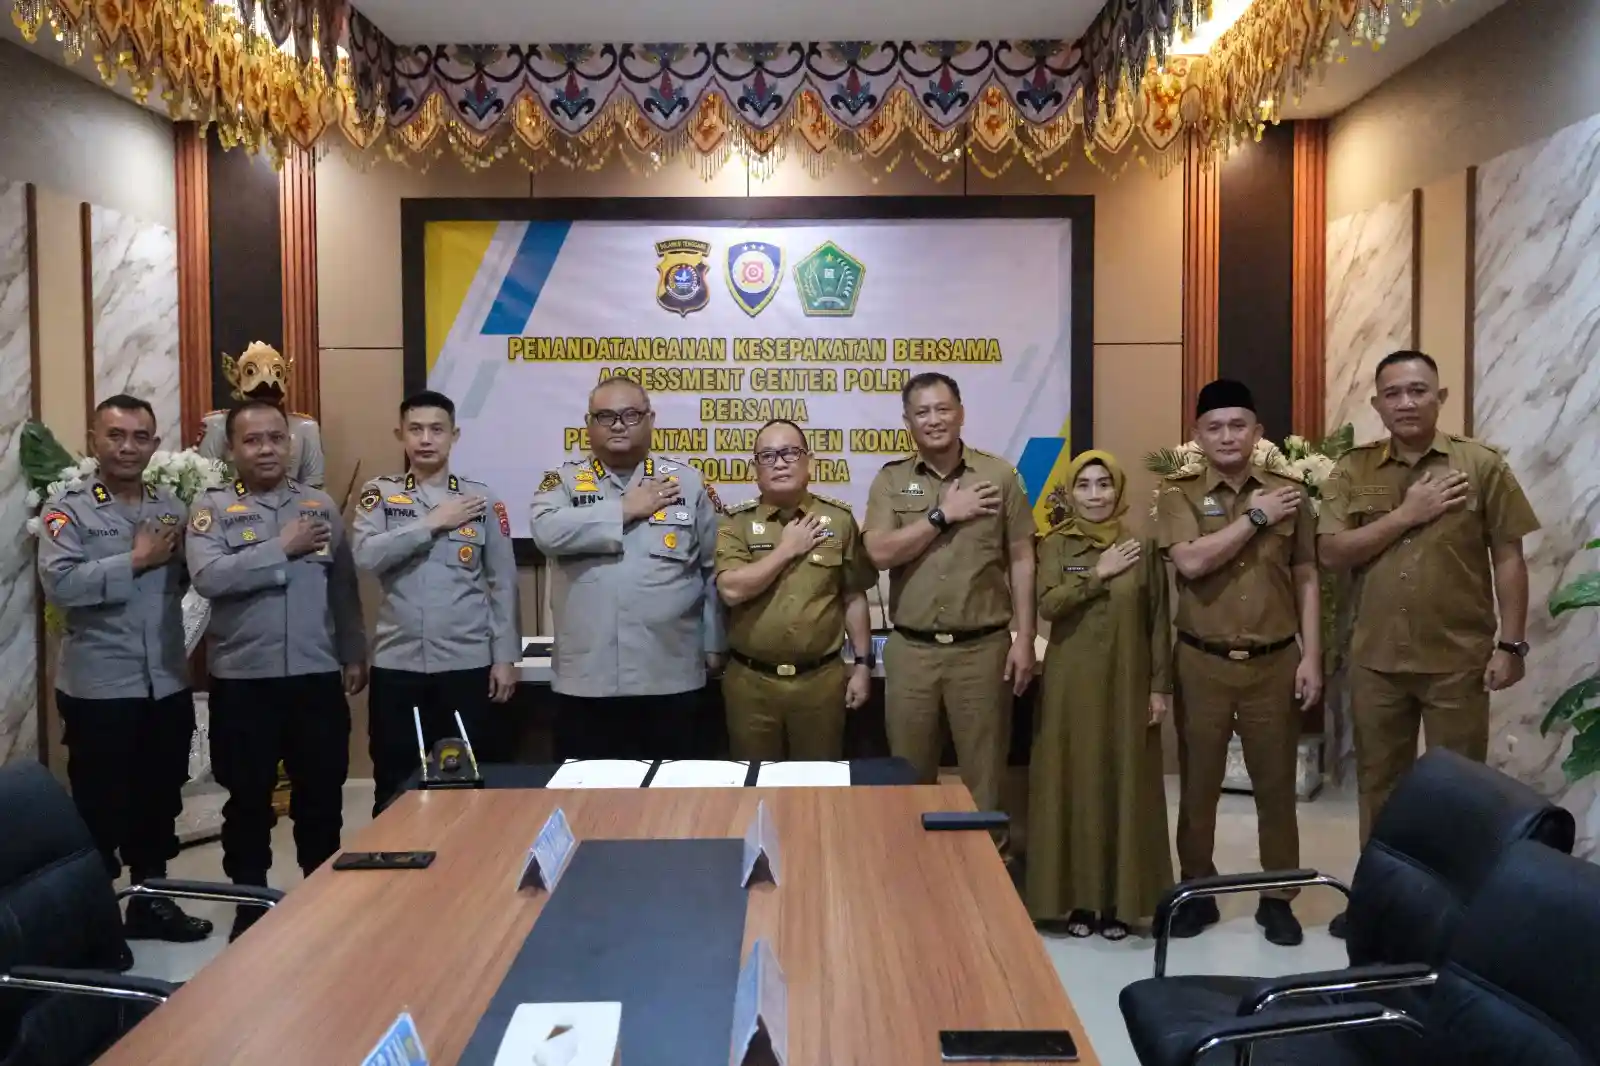 Biro SDM Polda Sulawesi Tenggara Teken MoU Assessment Center Polri dengan Pemkab Konawe